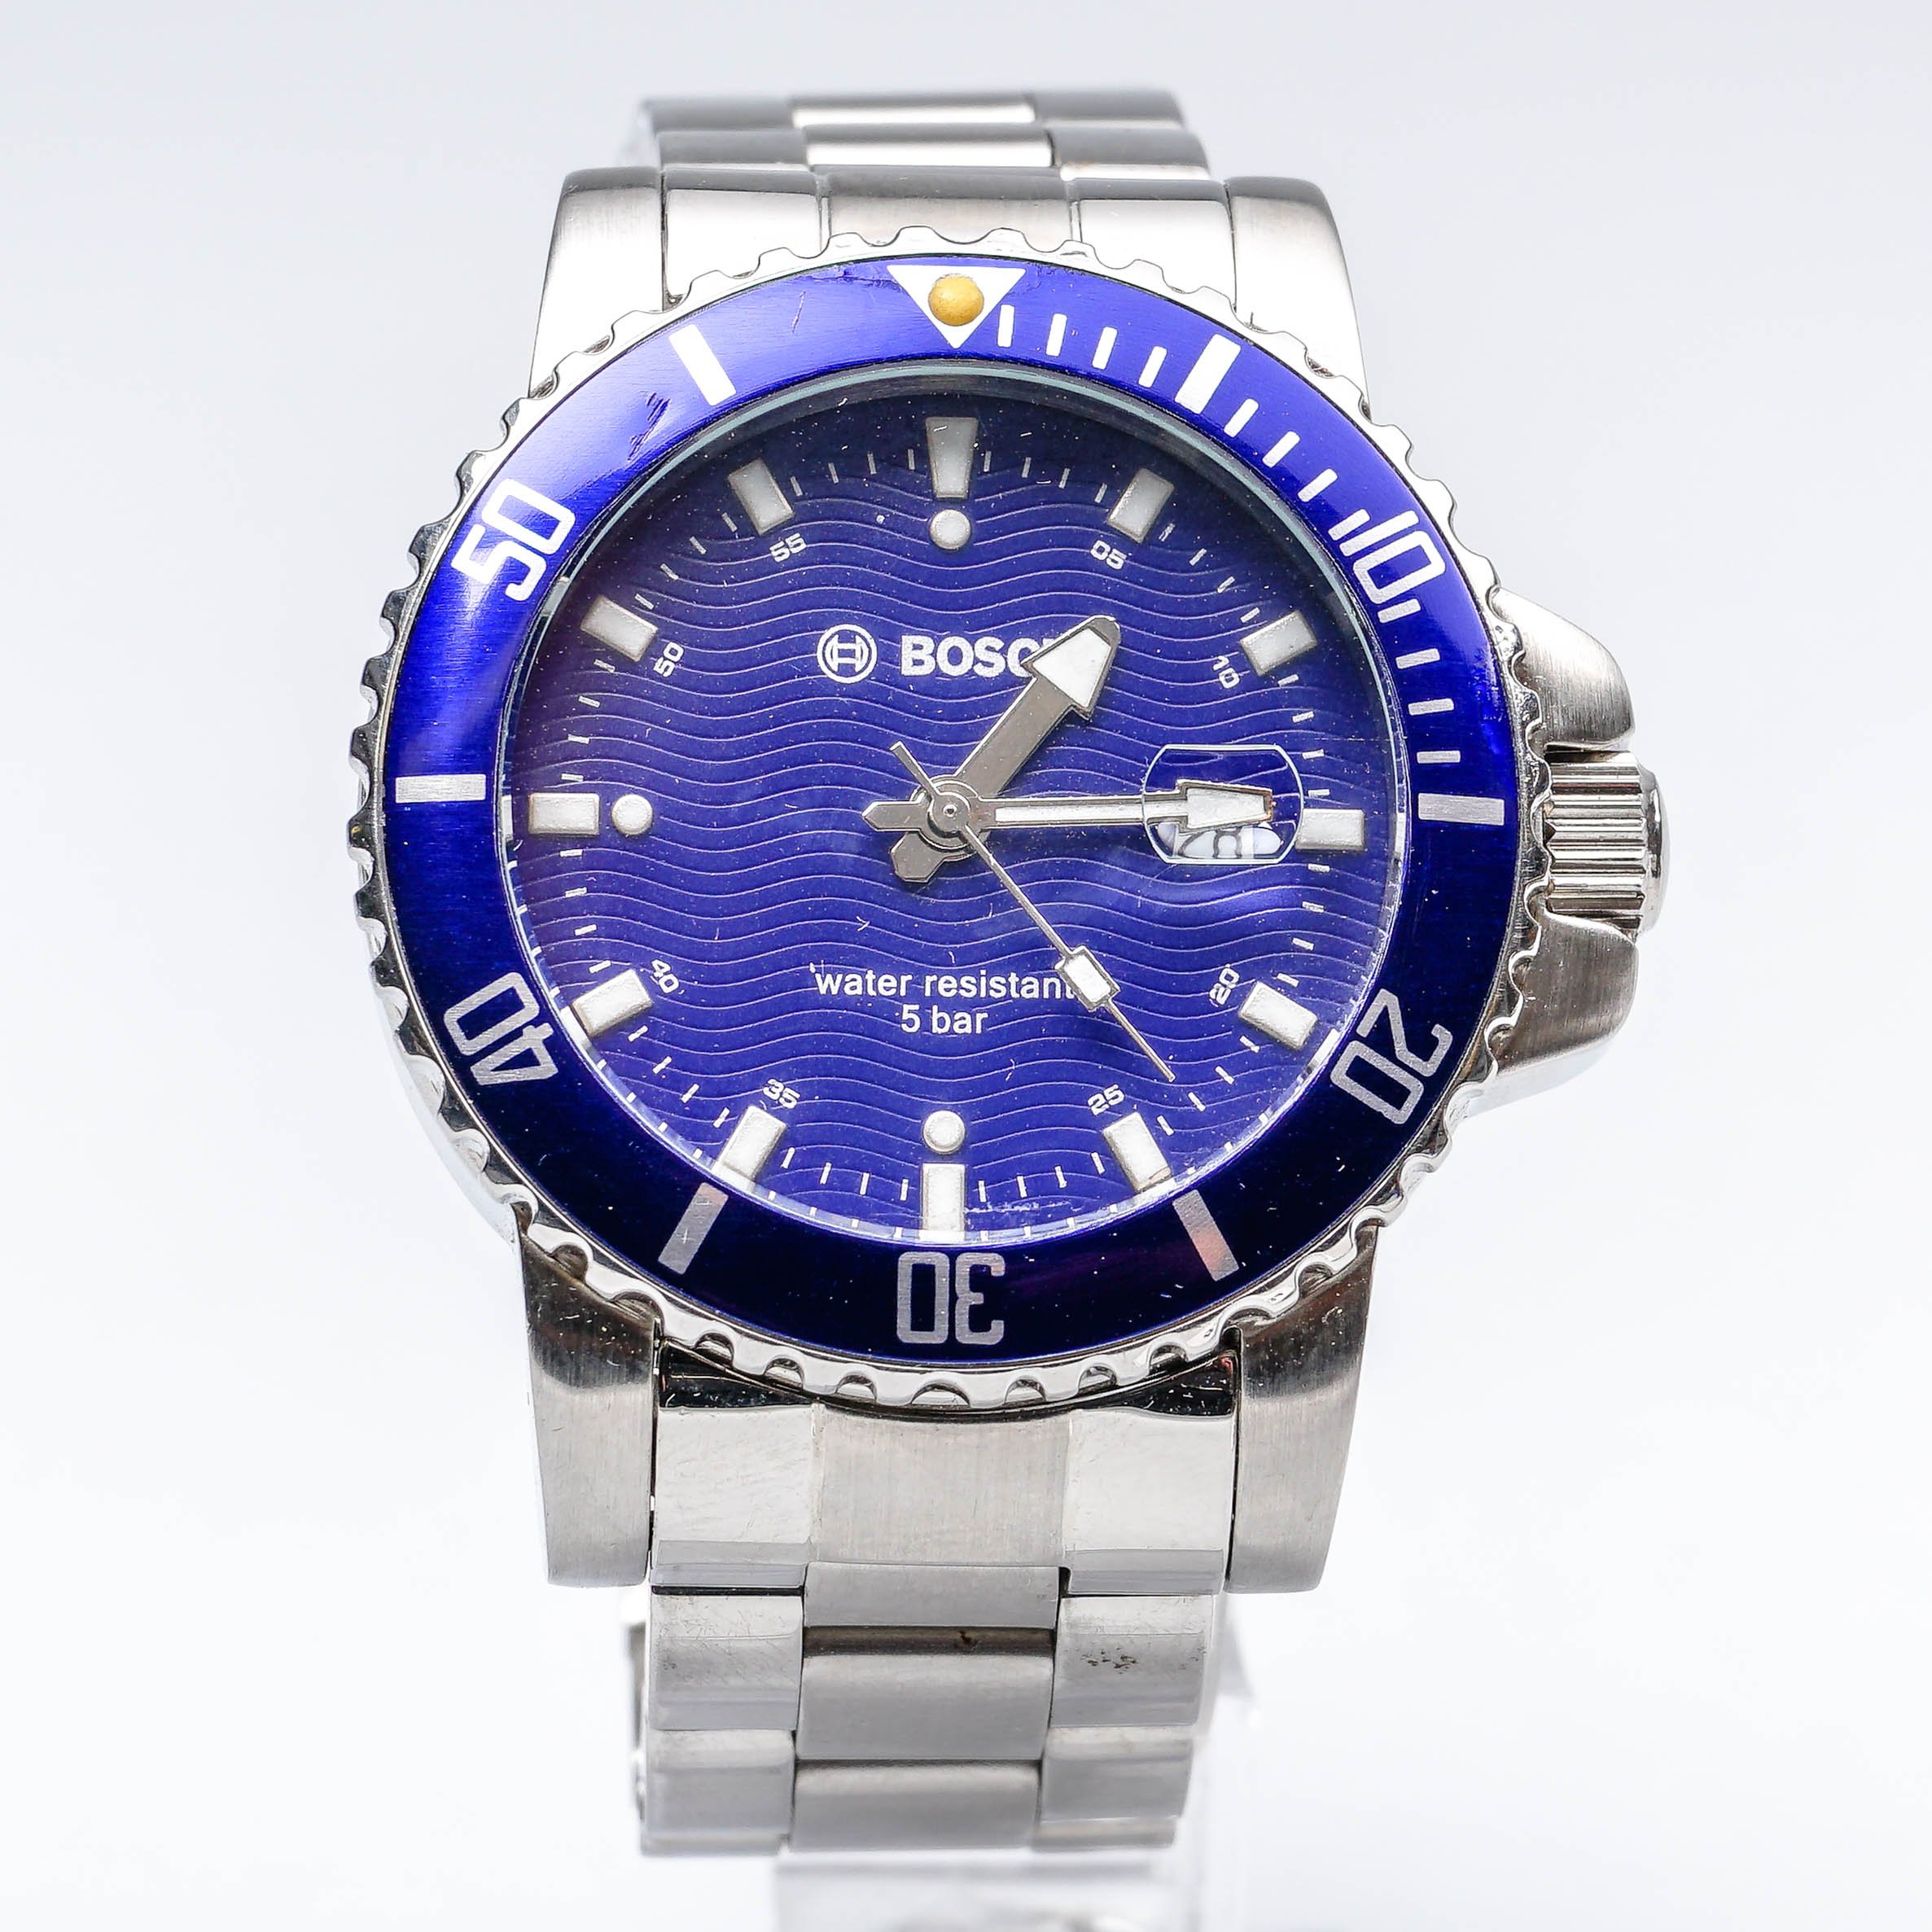 Bosch watch